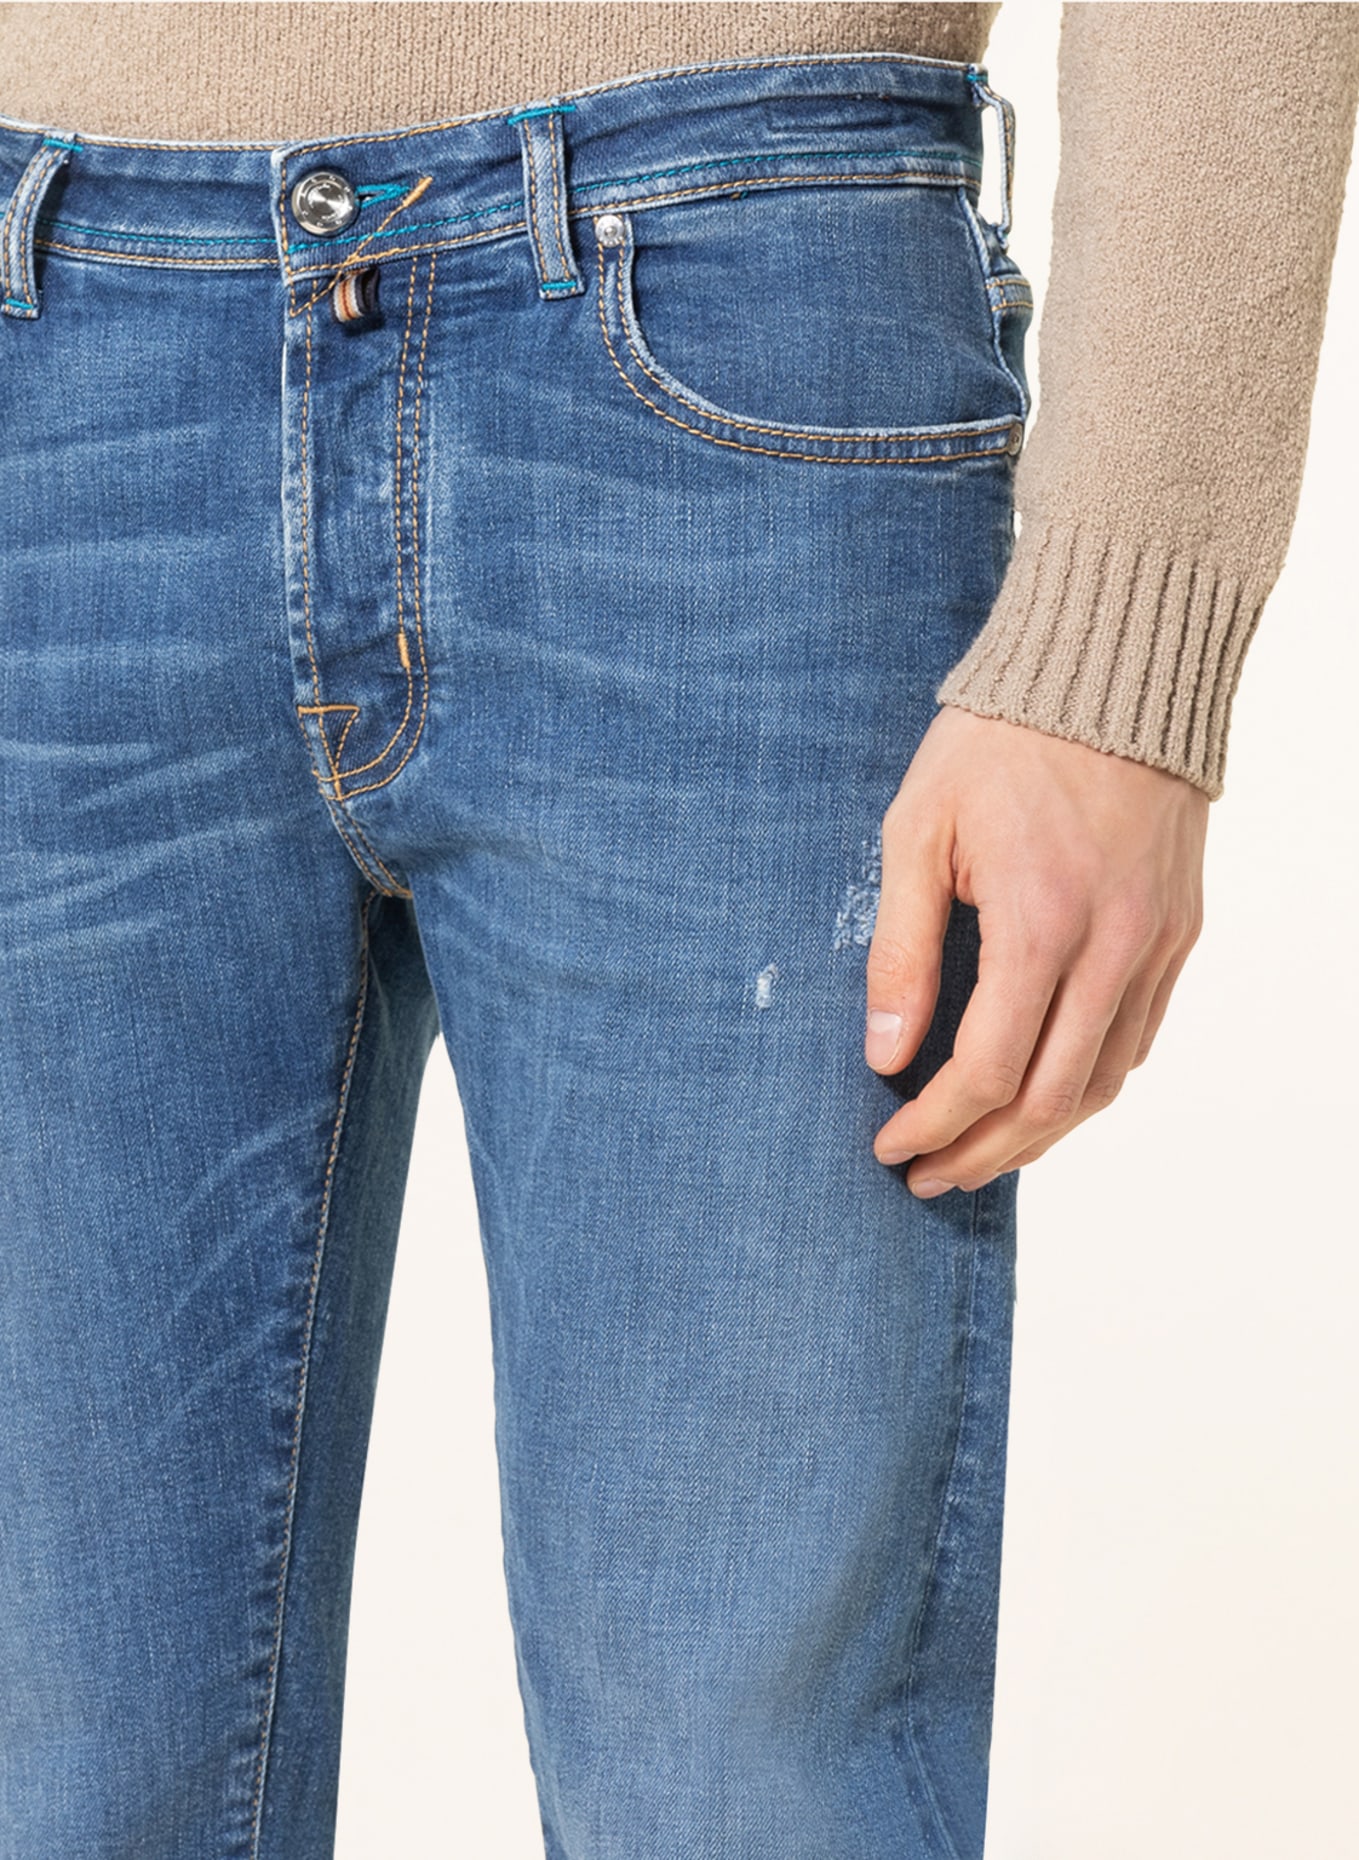 JACOB COHEN Jeans BARD LIMITED Regular Fit, Farbe: 418D Light Blue USed (Bild 5)